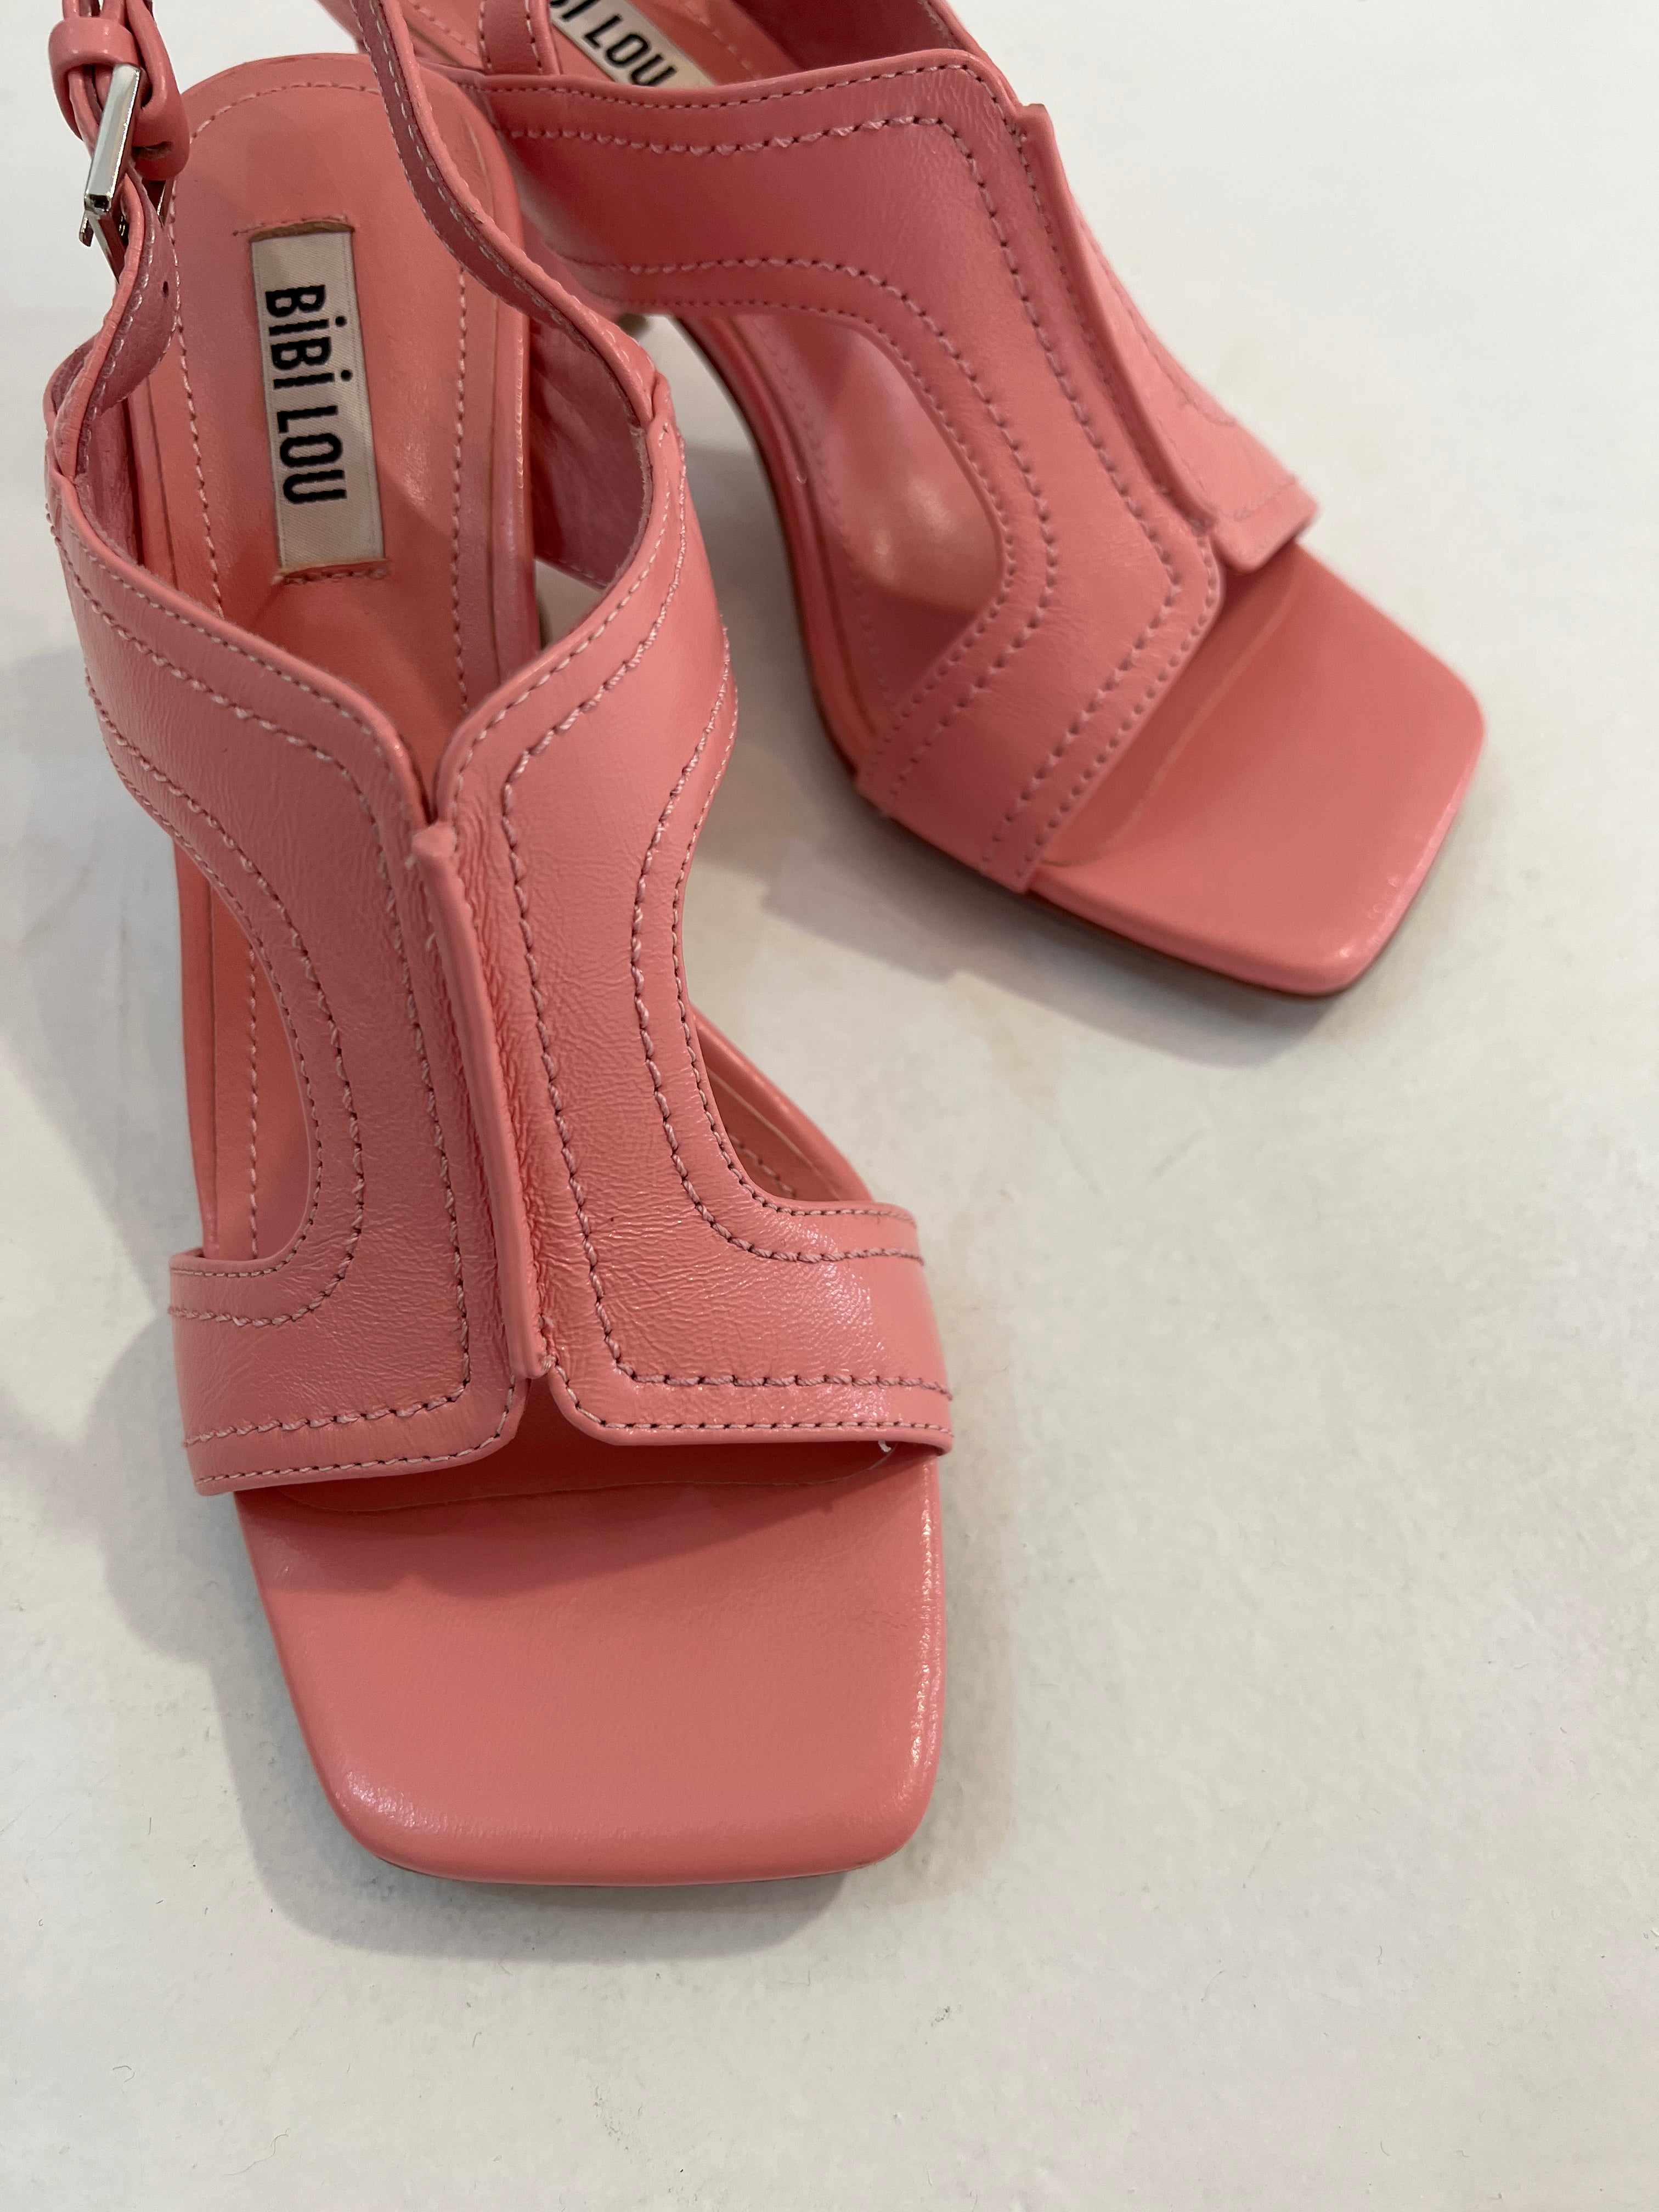 Hetre Alresford Hampshire Shoe Store Bibi Lou Pink Leather High Sandal